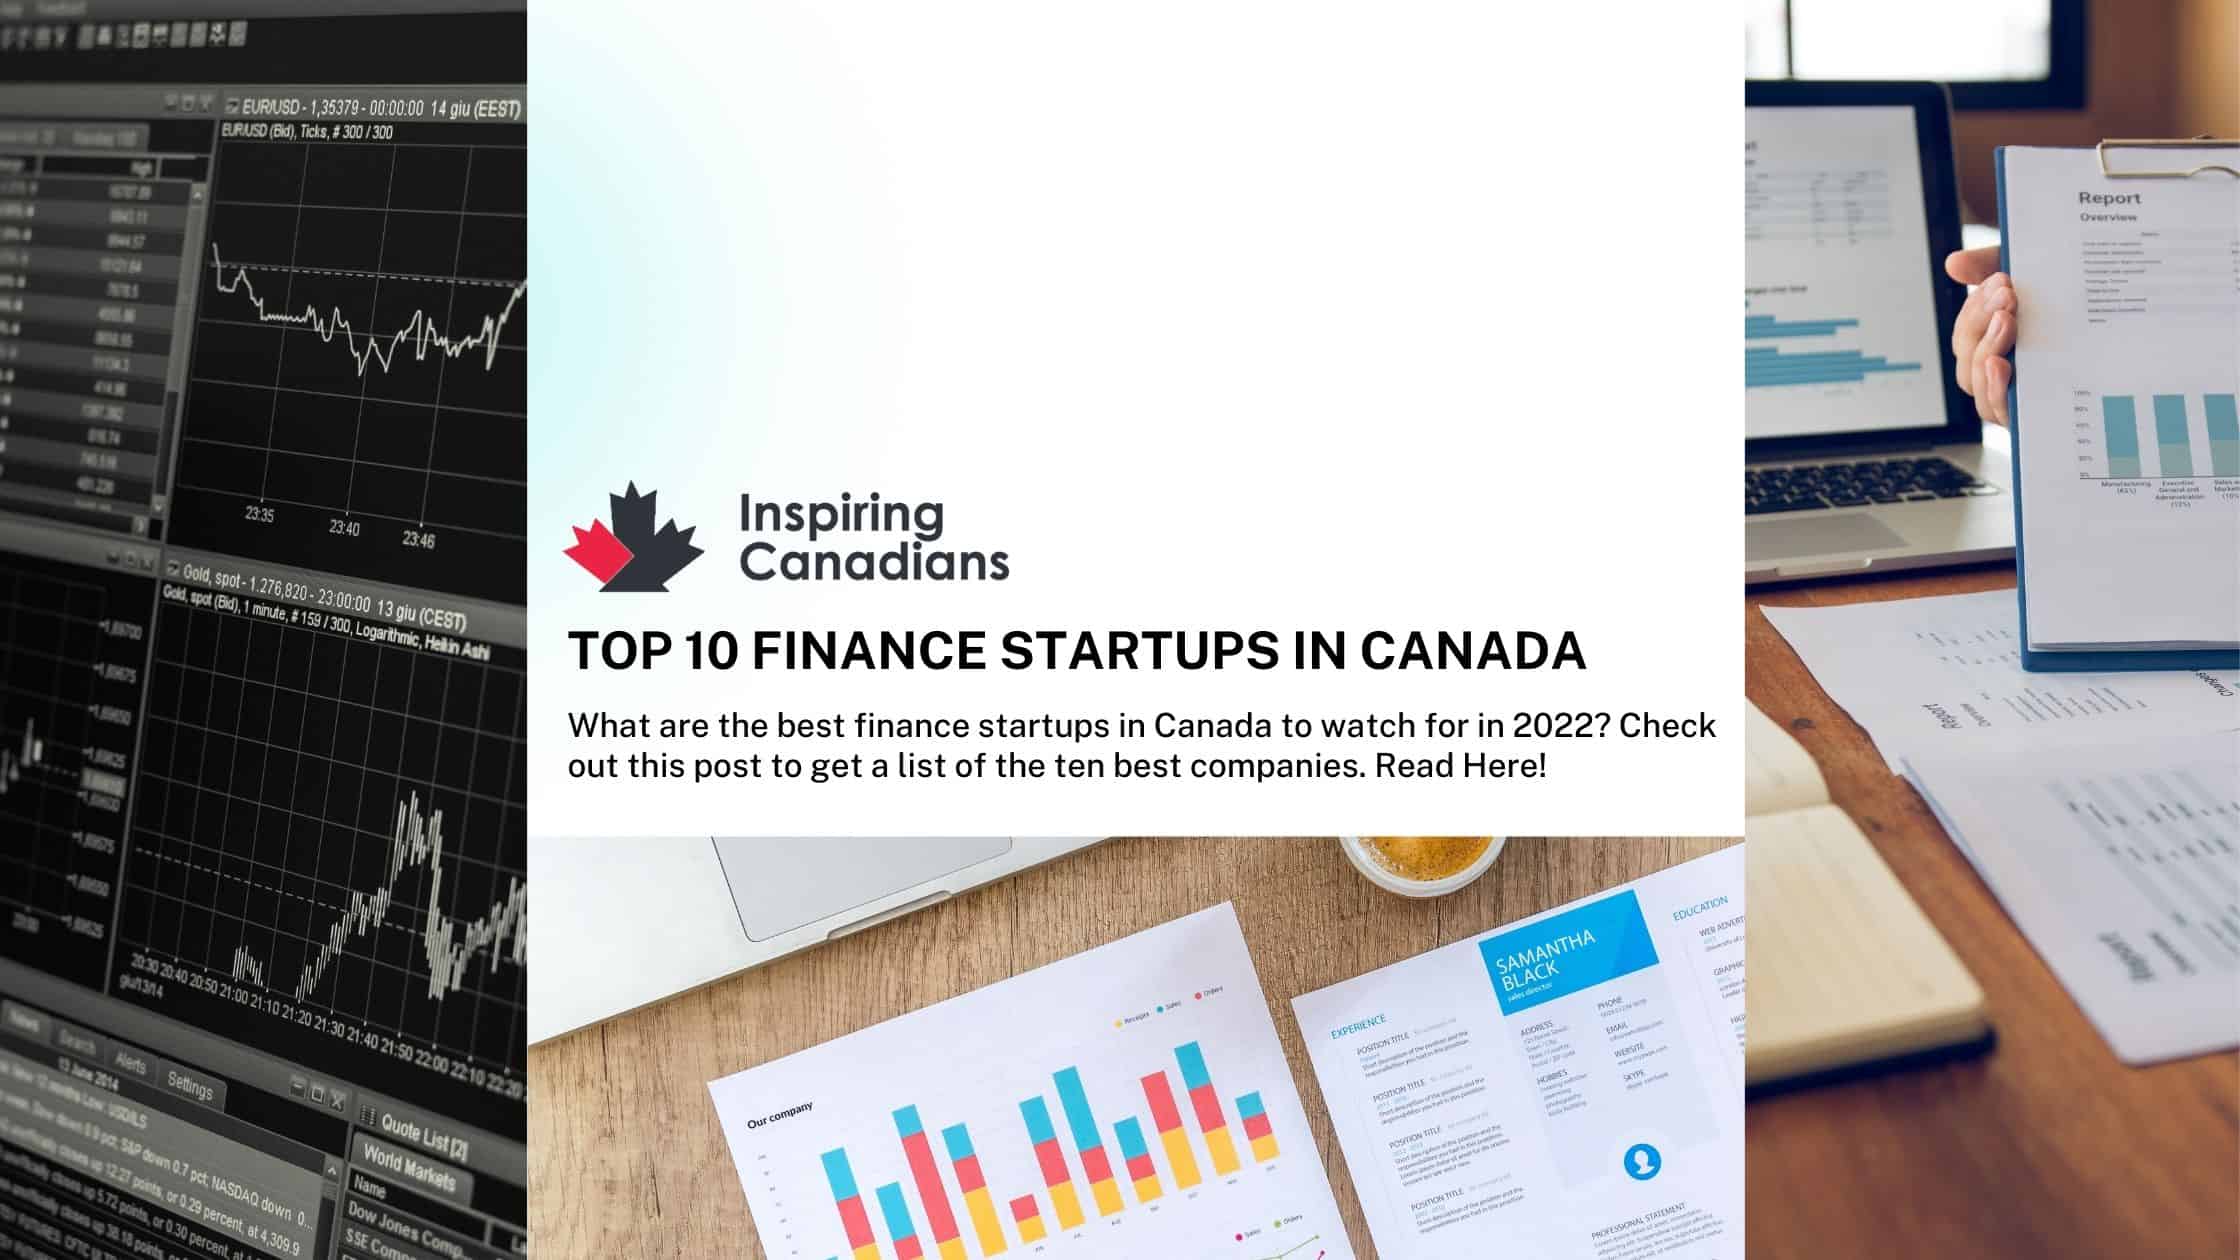 Top 10 Finance startups in Canada